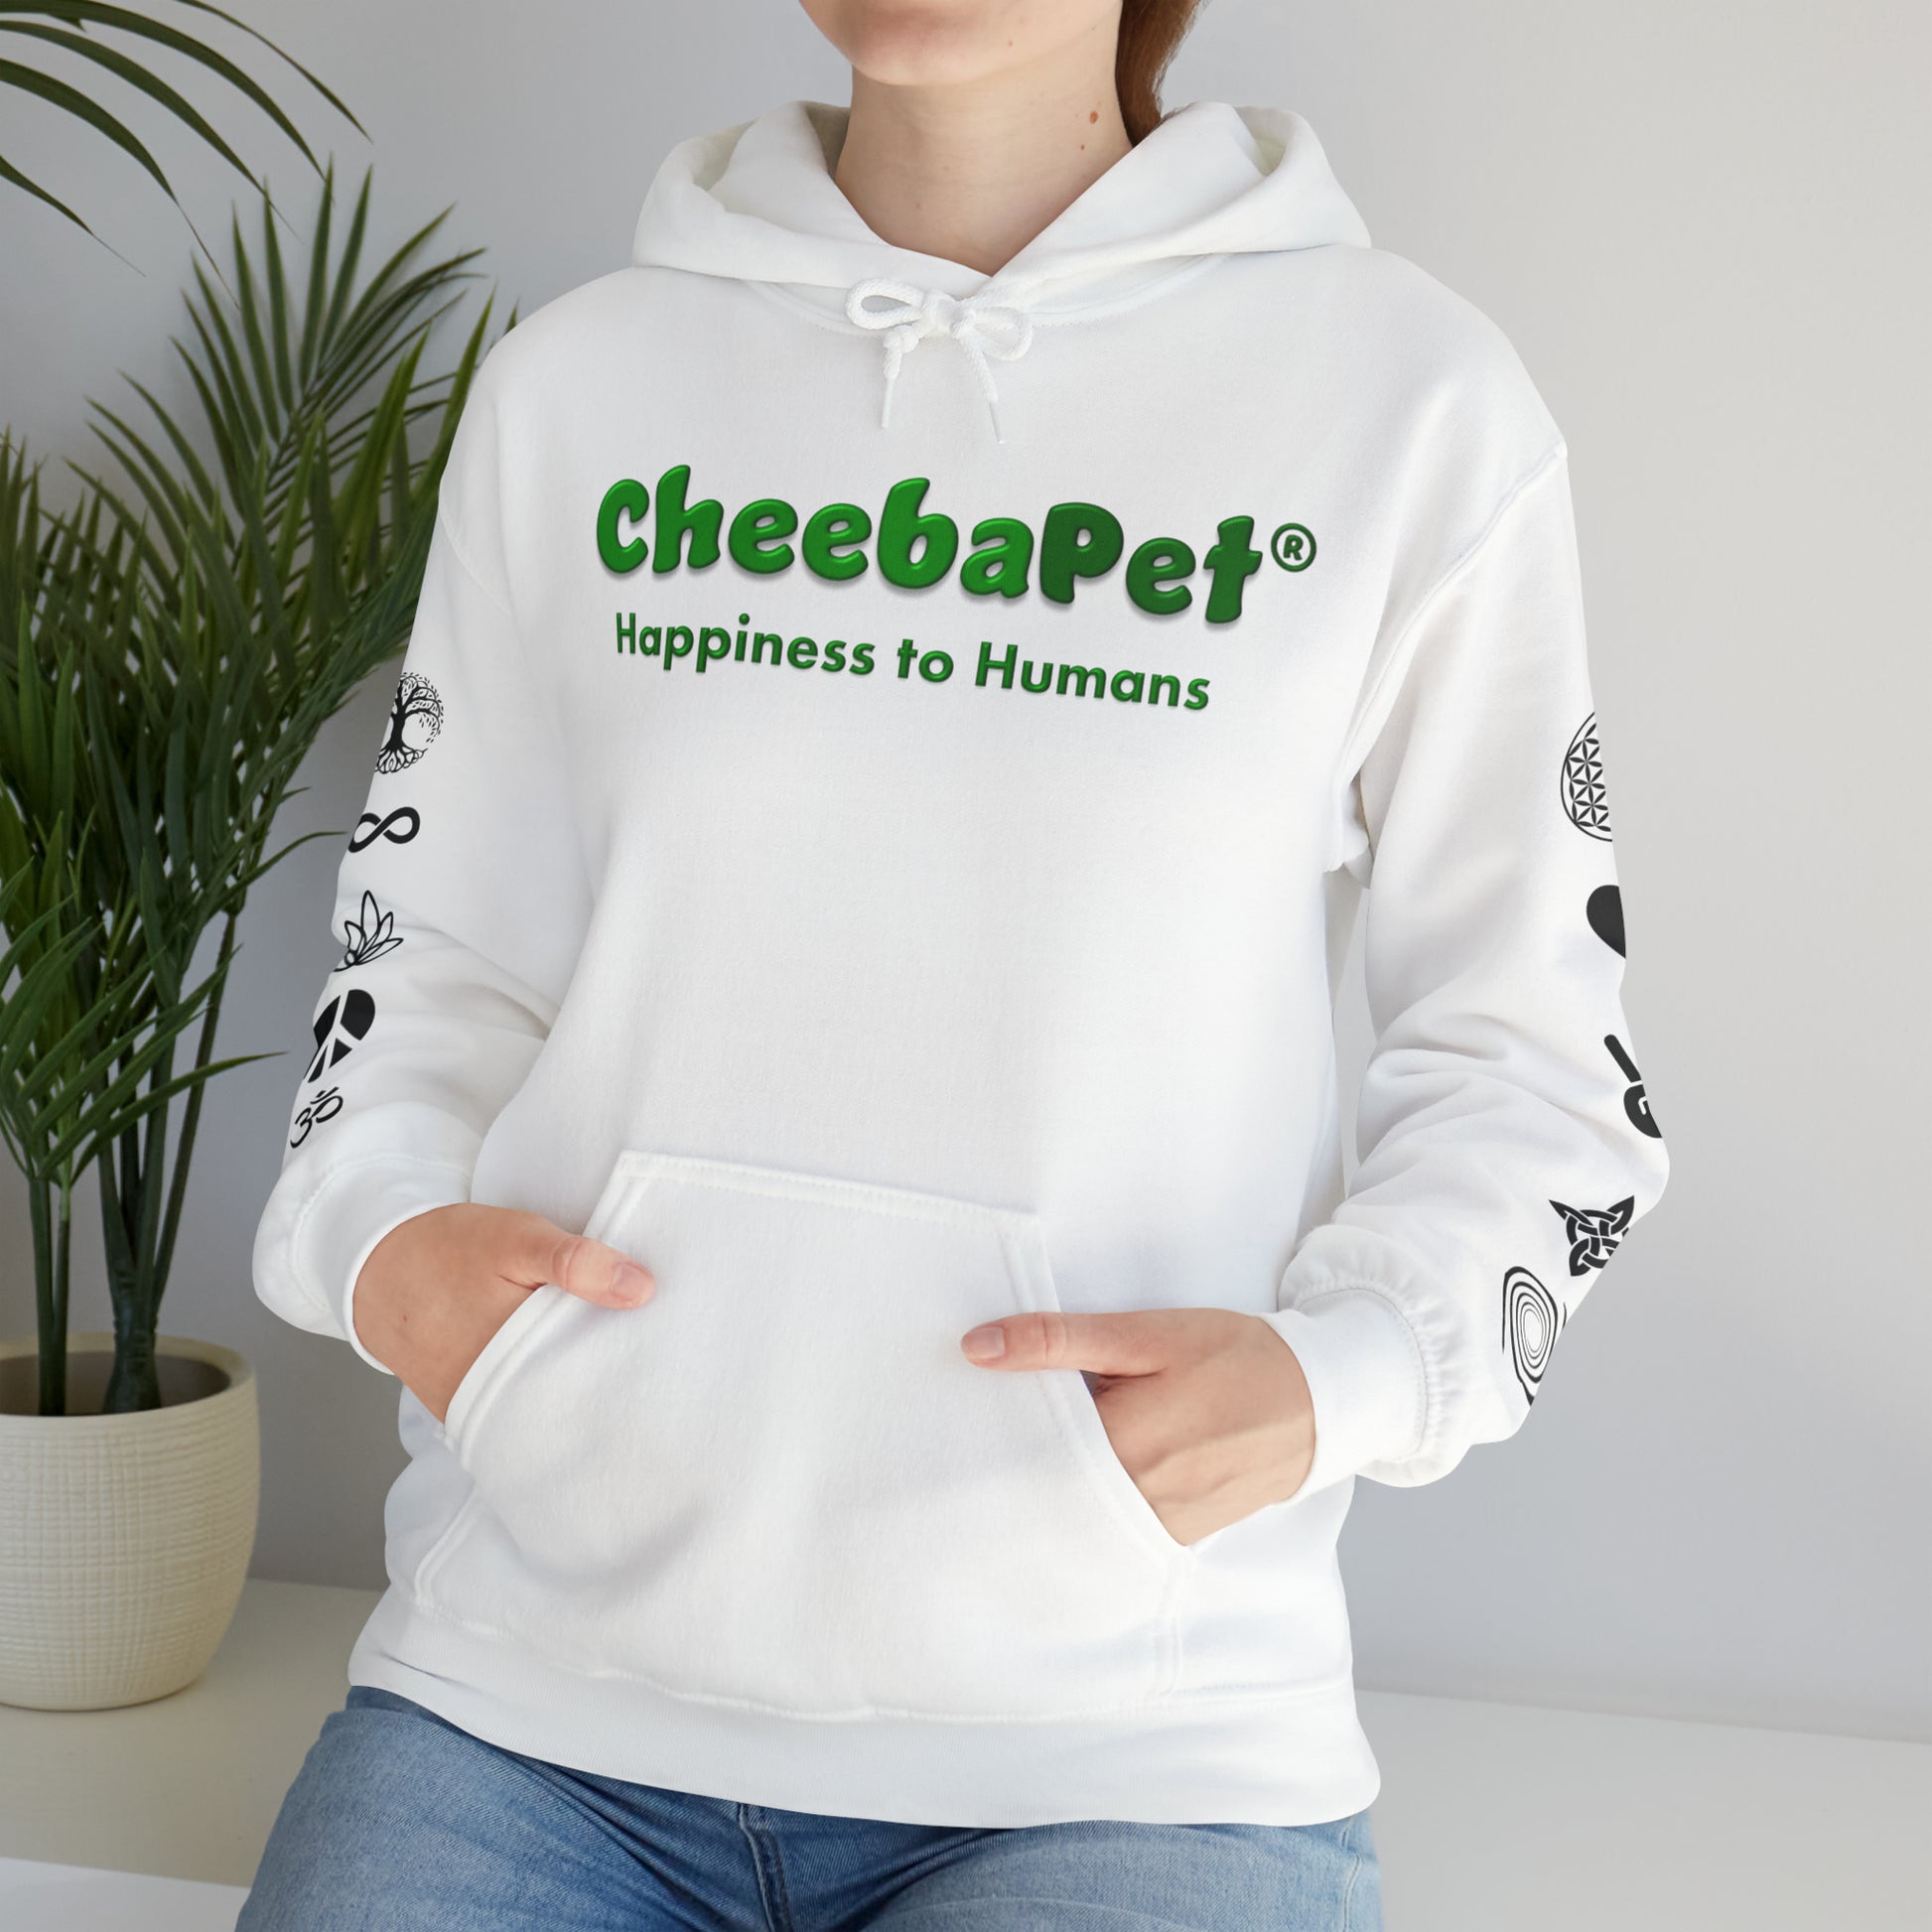 CheebaPet, Inc. - Product Title